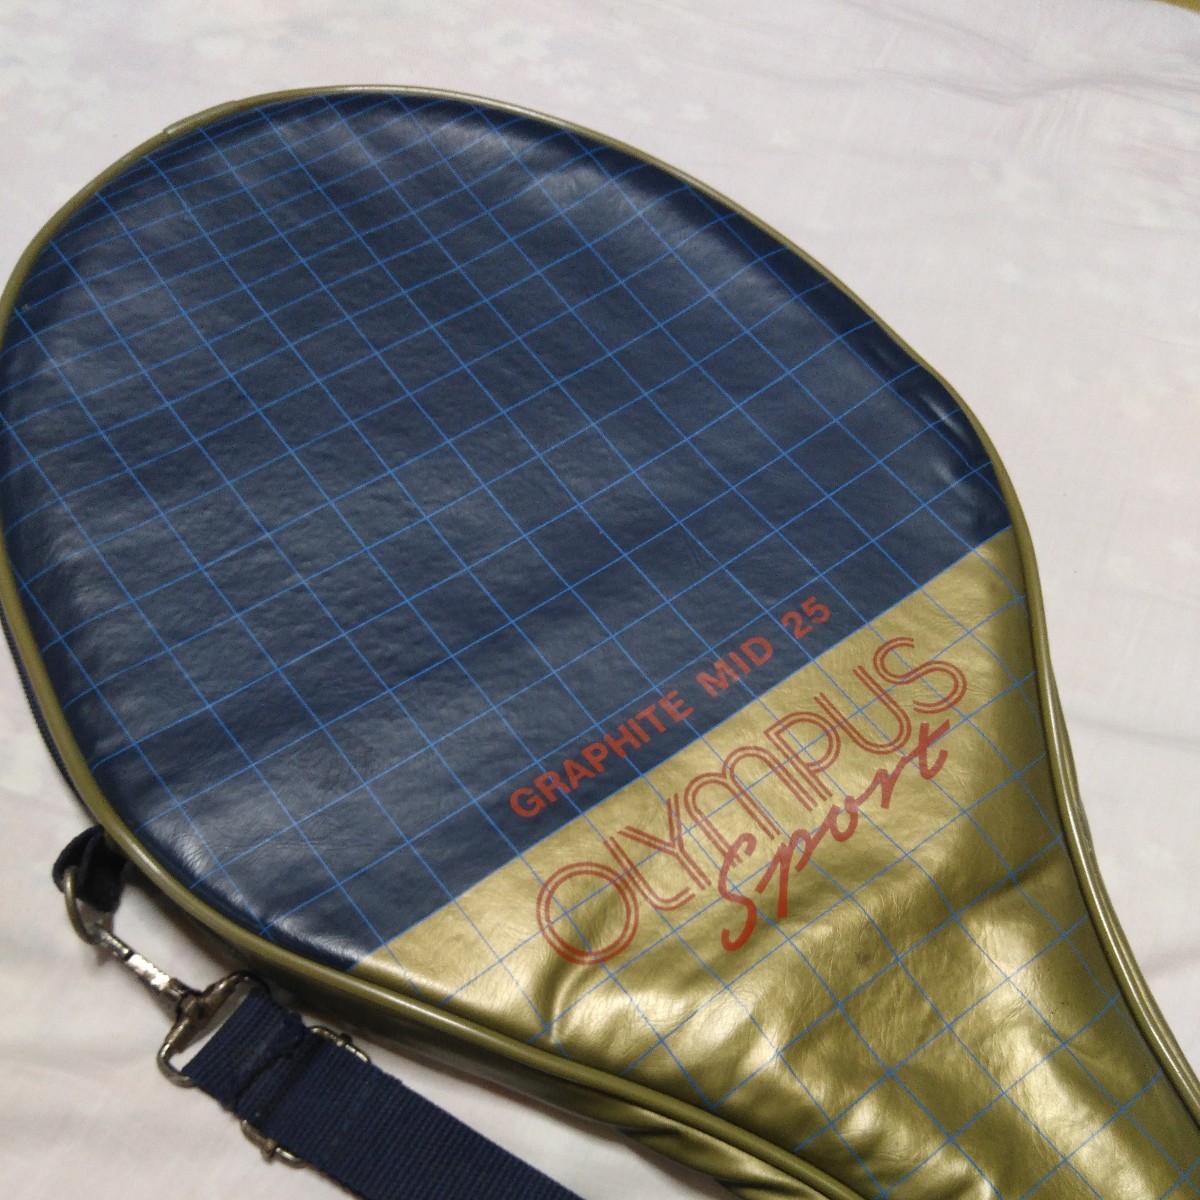  price cut. ultra rare tennis racket OLYMPUS REFLEX MID 25